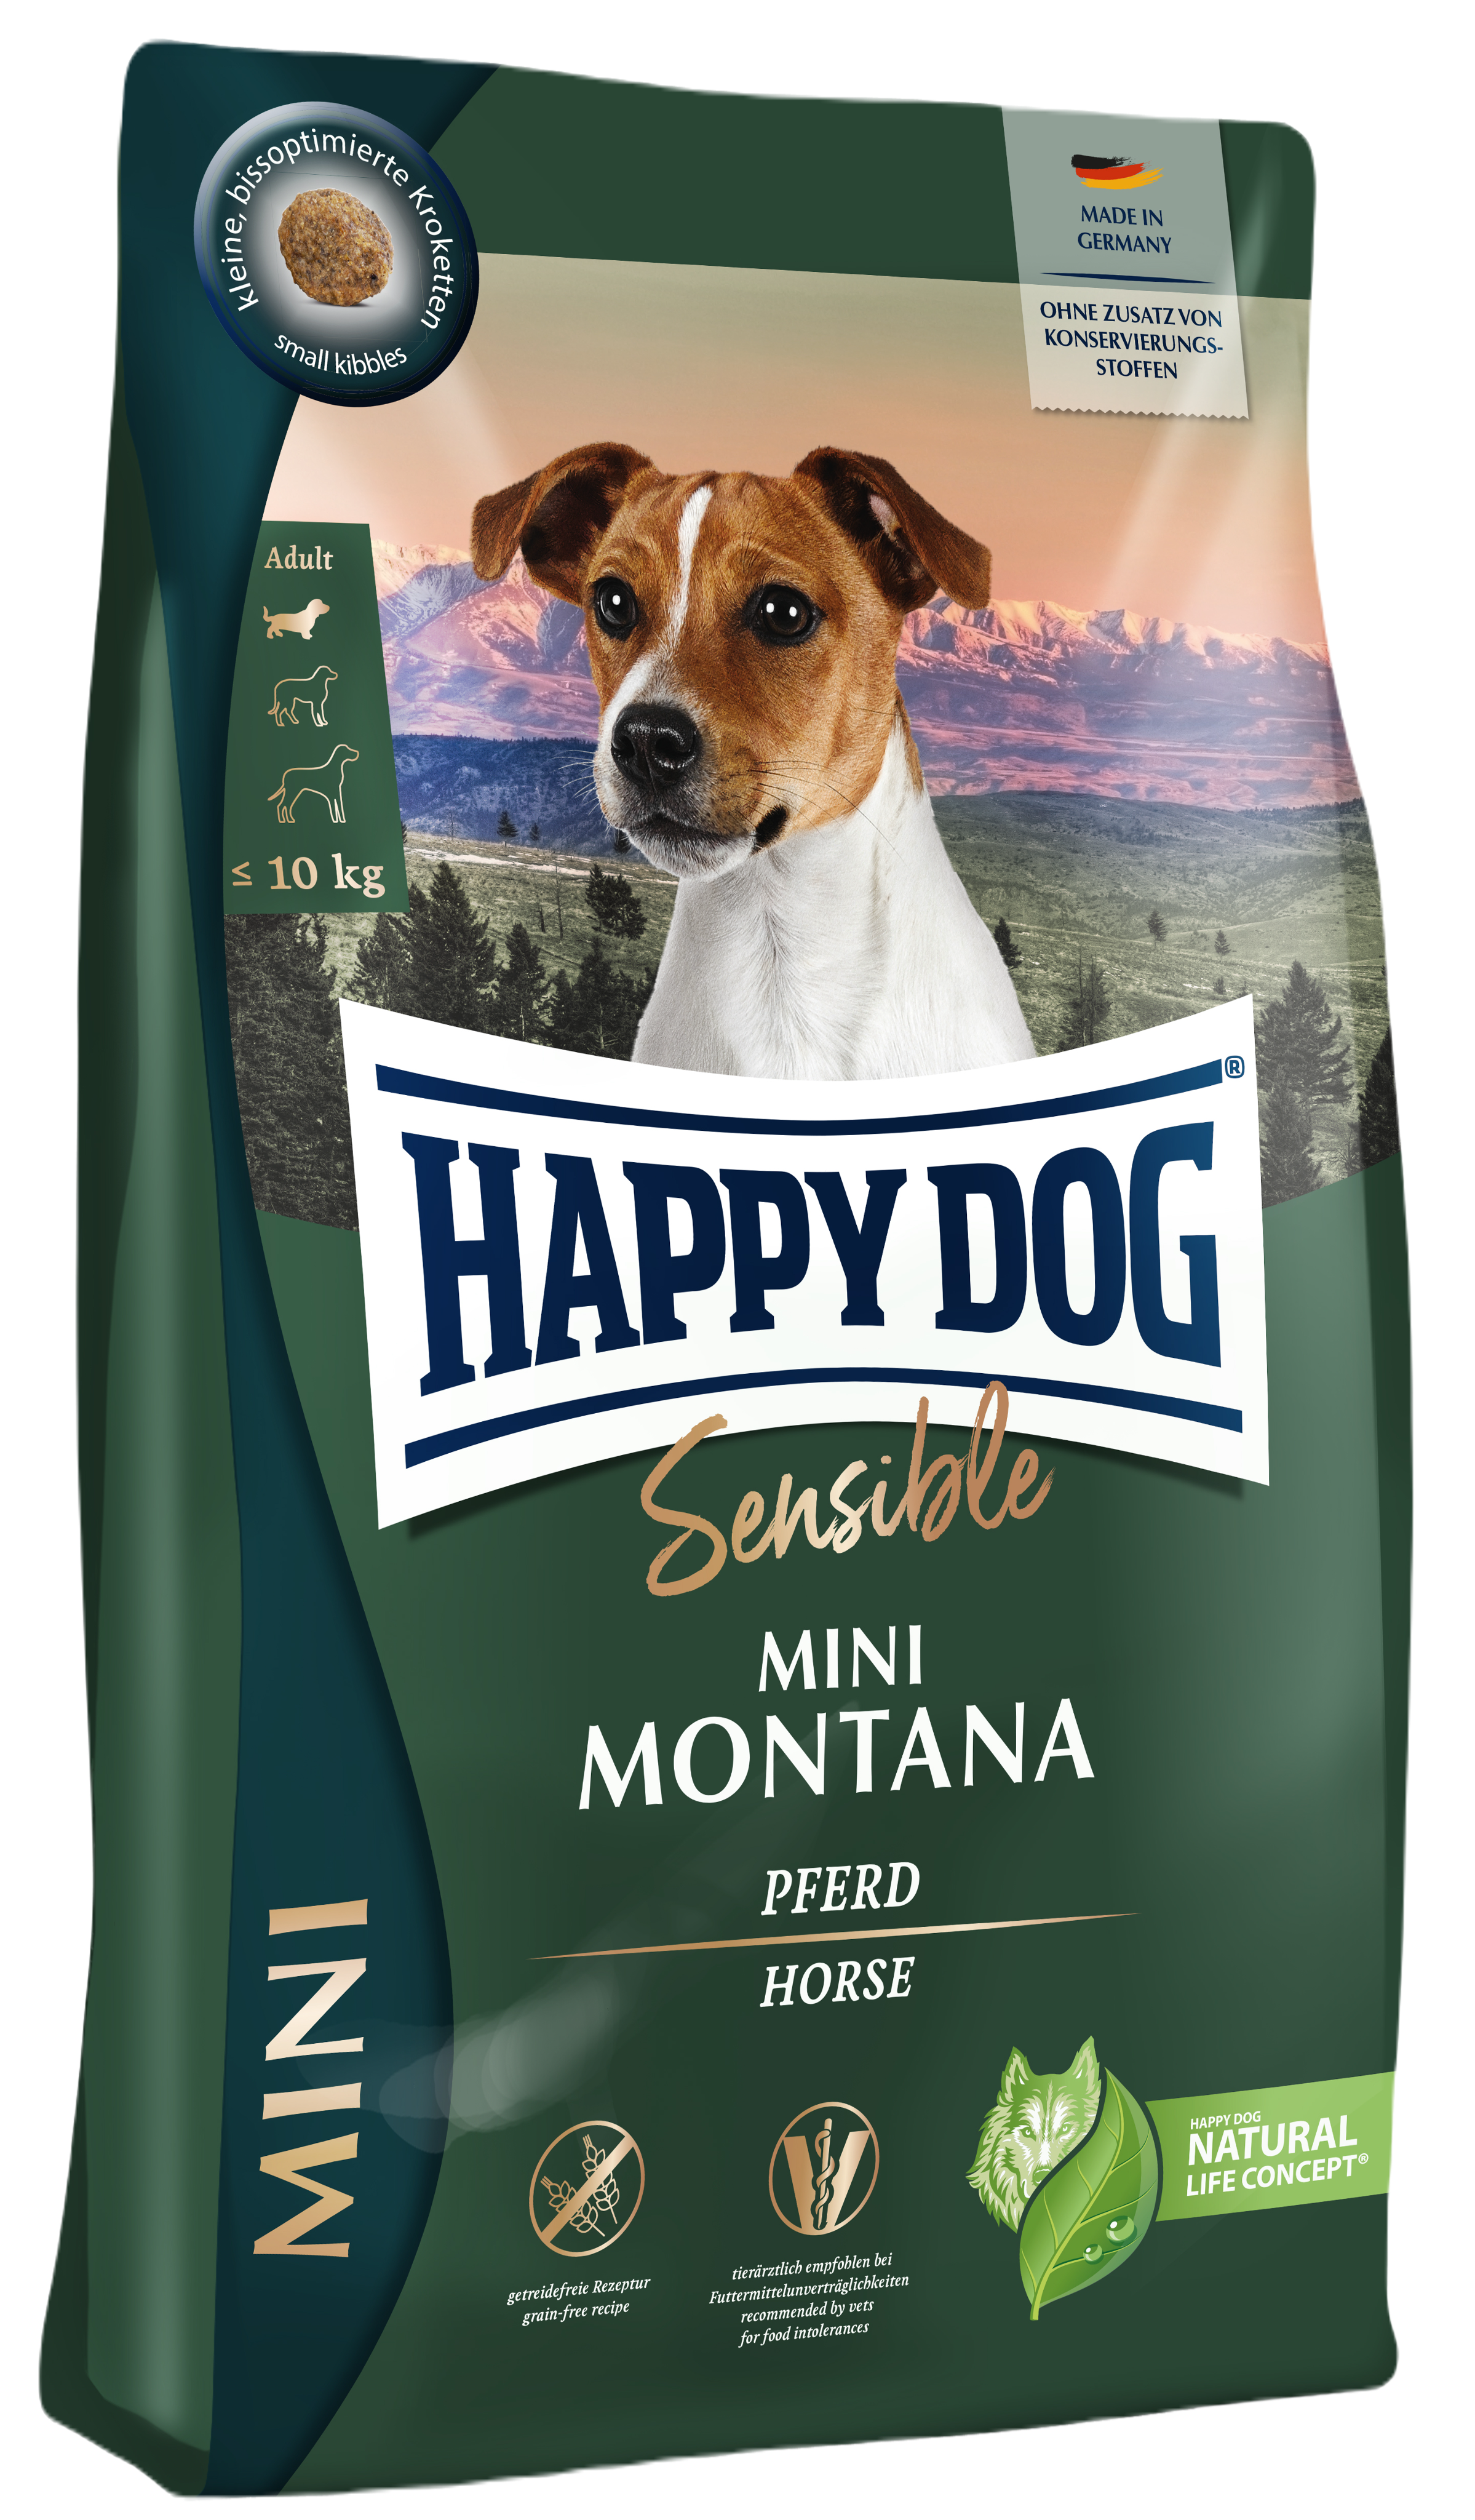 Sensible Mini Montana GrainFree Horse & Potato 800 g - Hund - Hundmat & hundfoder - Torrfoder för hund - Happy Dog - ZOO.se